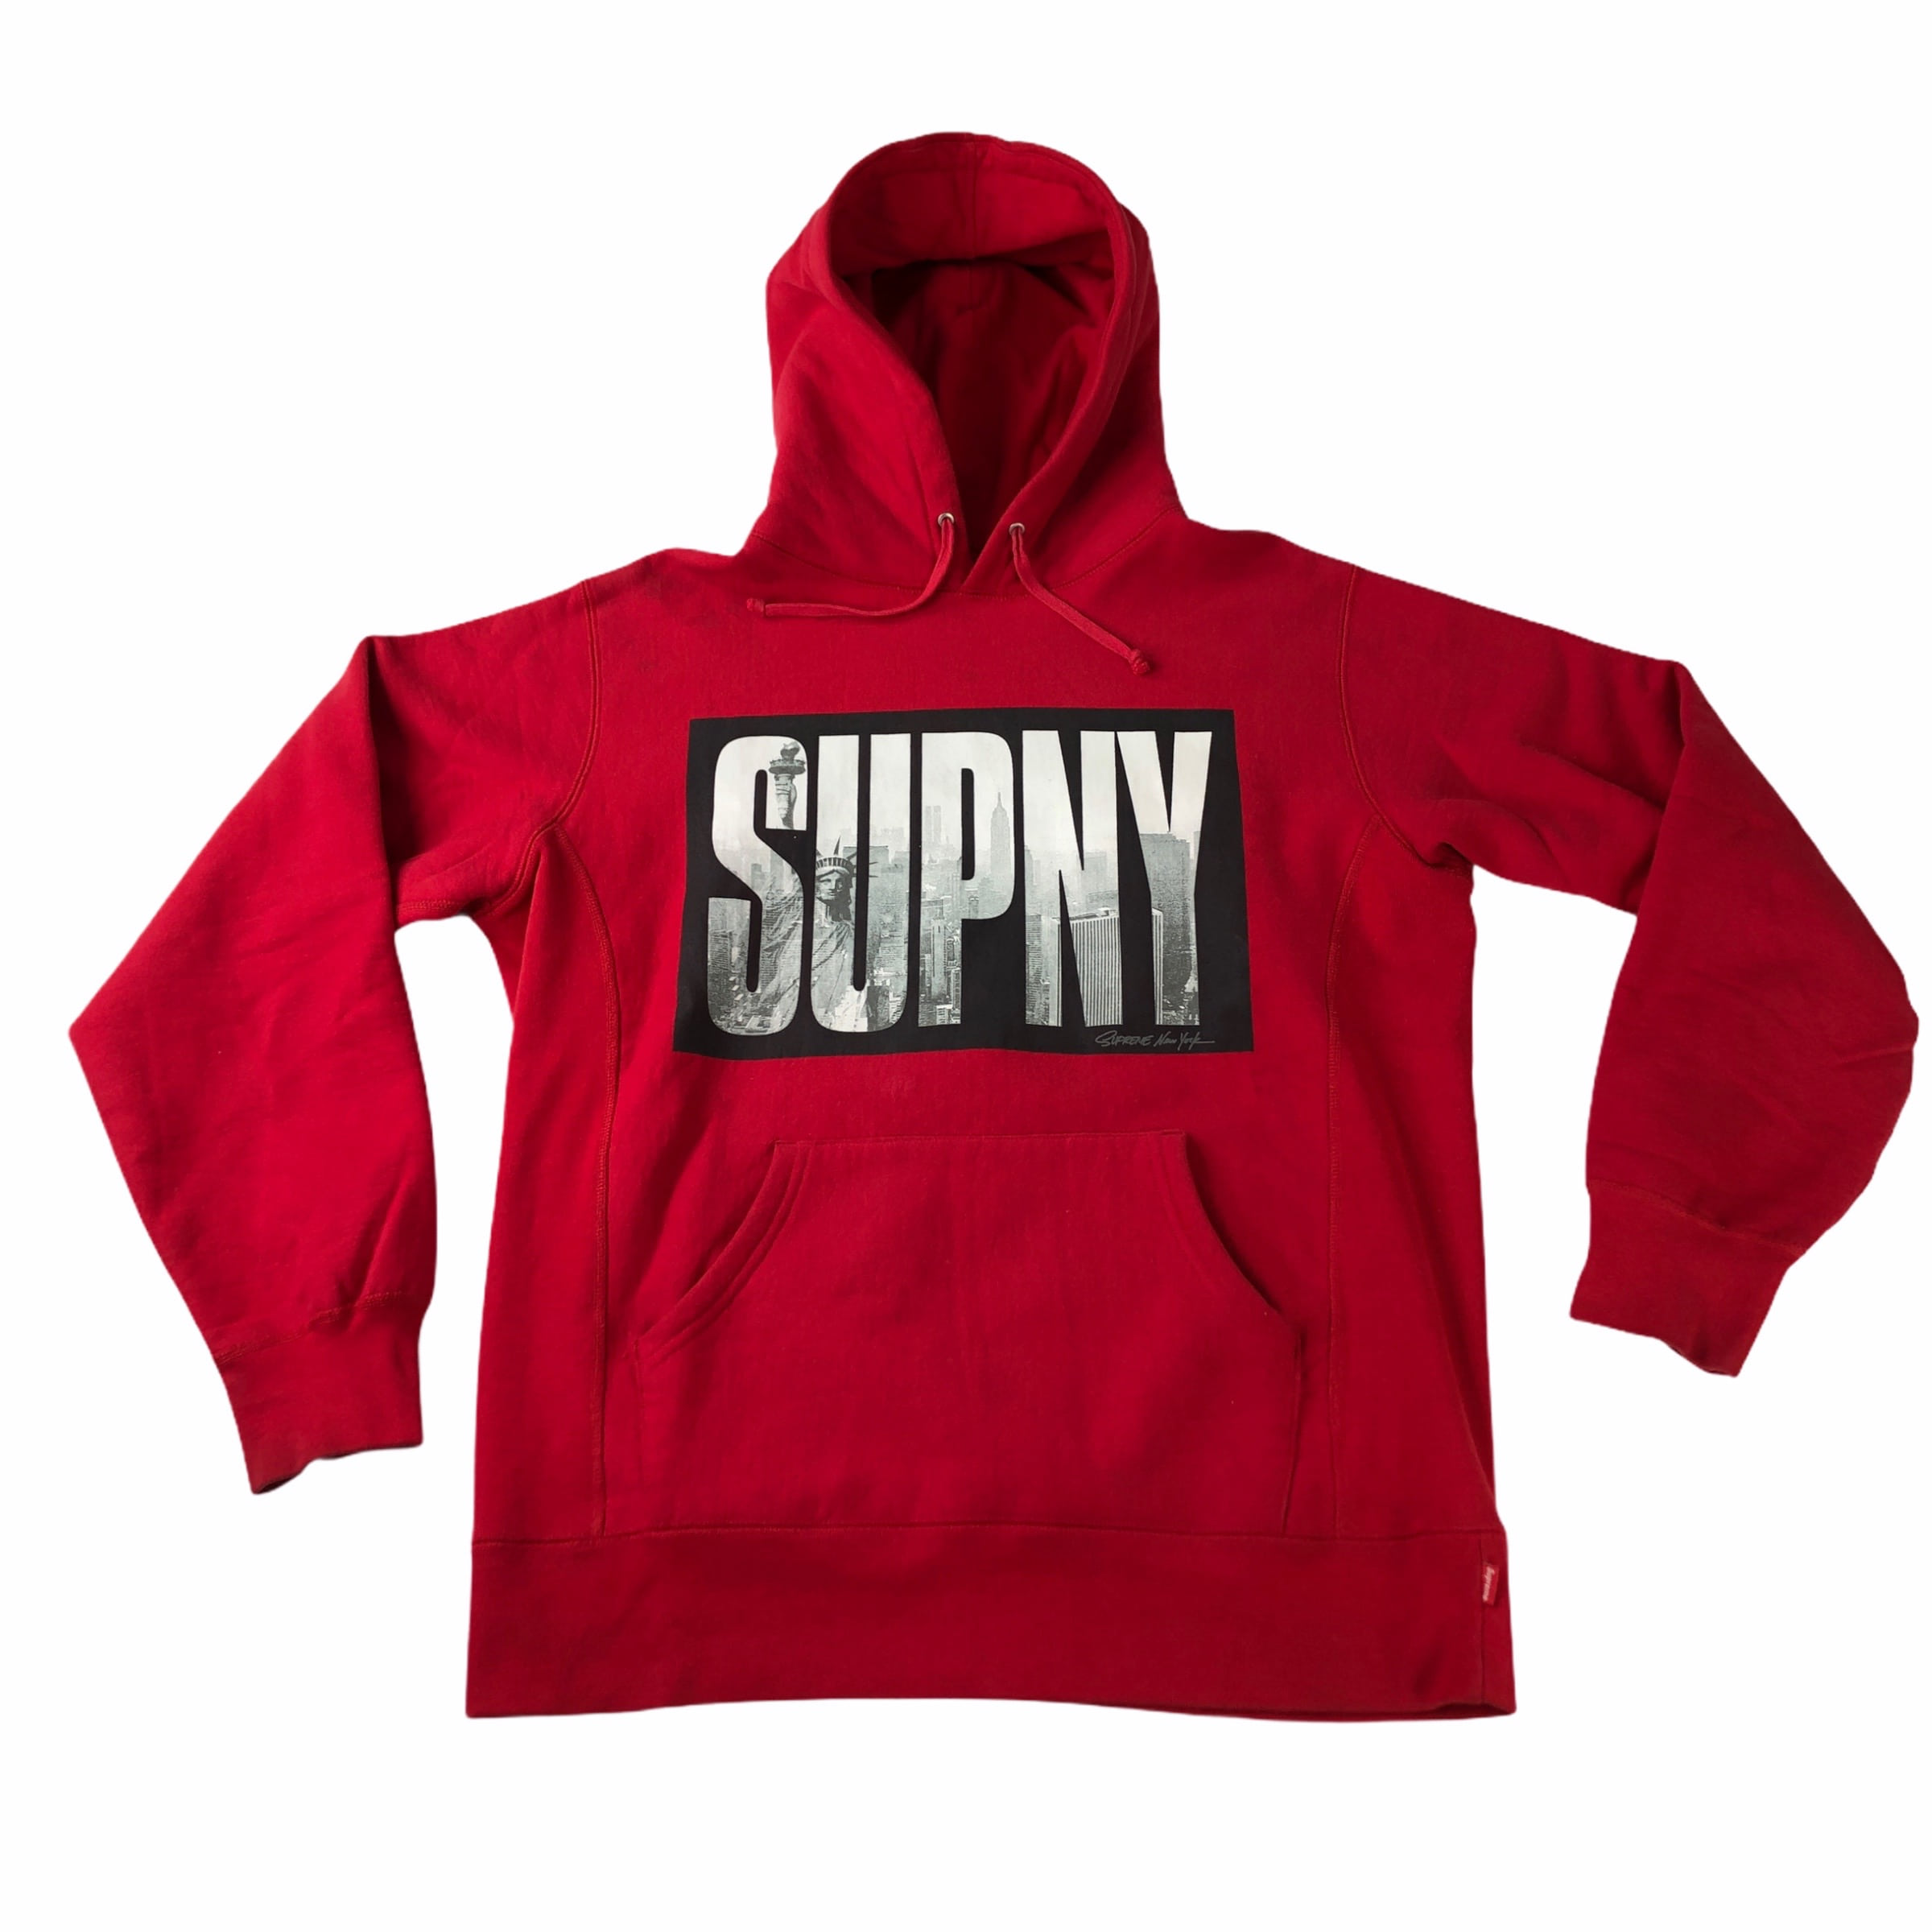 [Supreme] 2010 Supny Hoodie - Size L